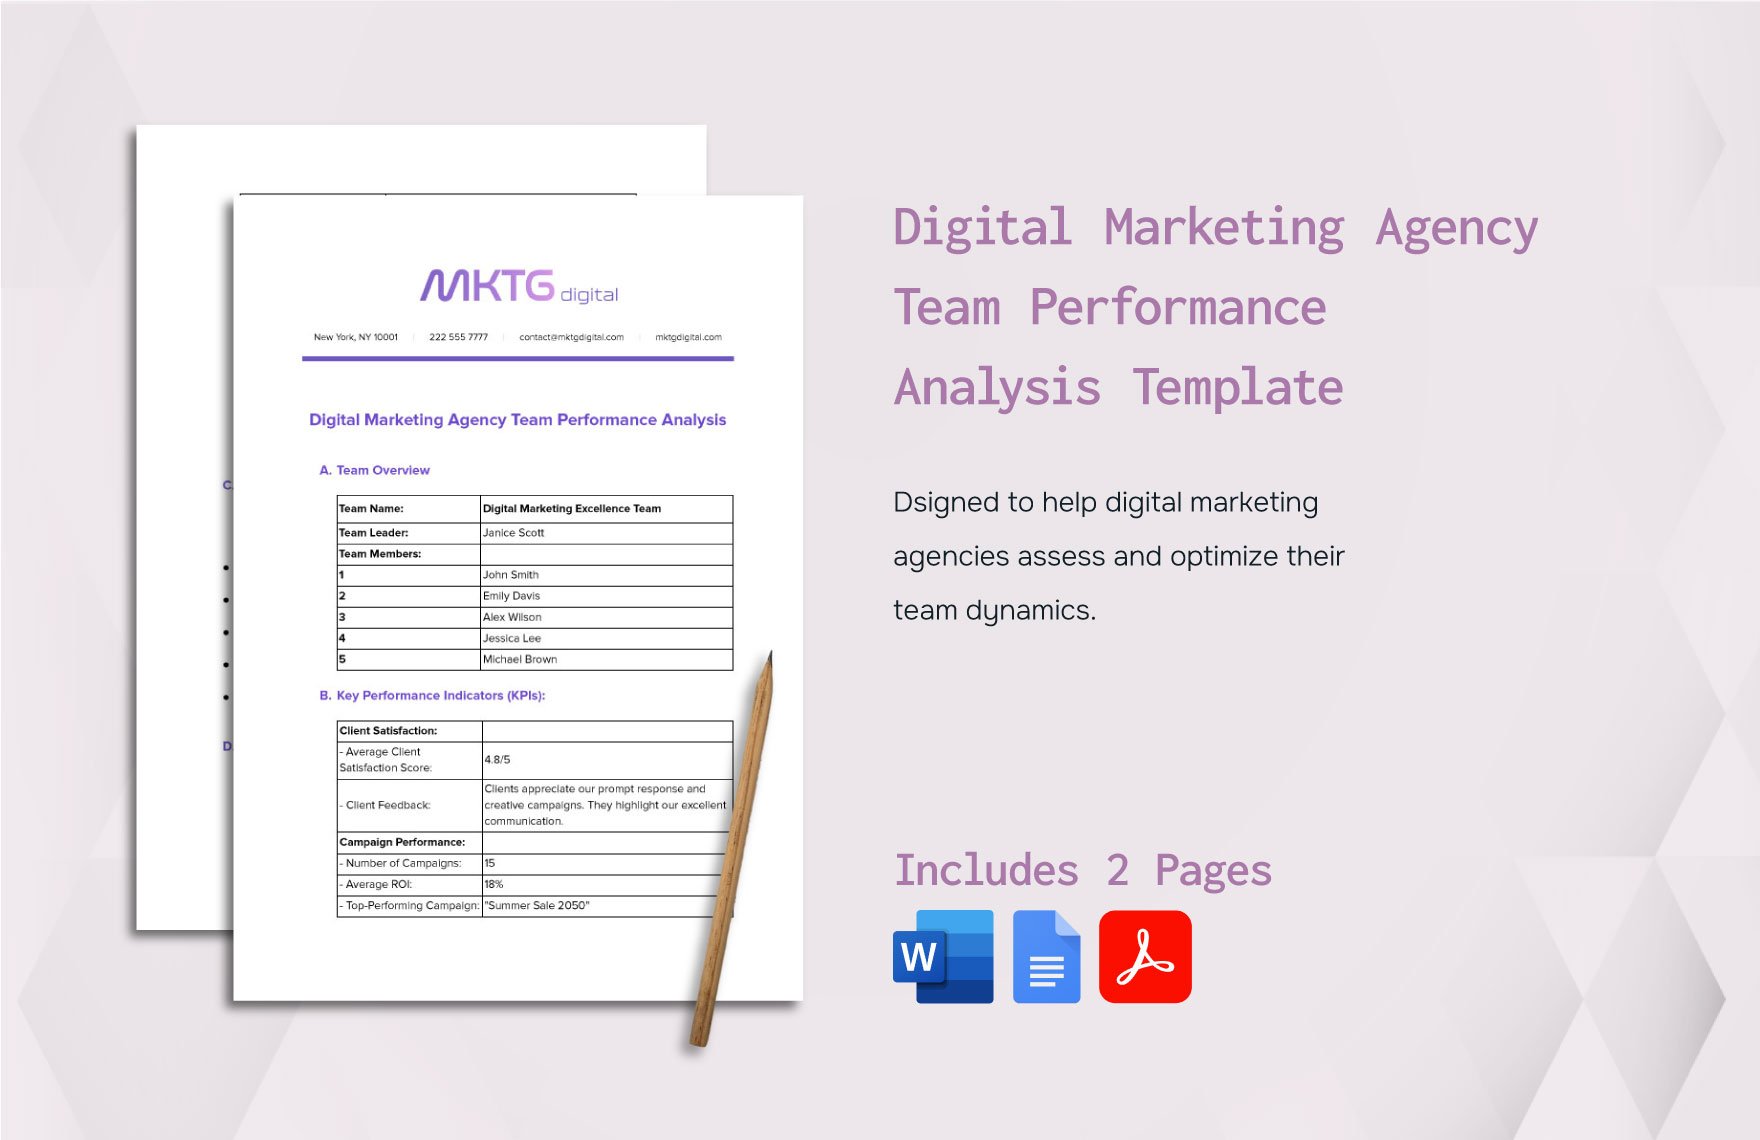 Digital Marketing Agency Team Performance Analysis Template